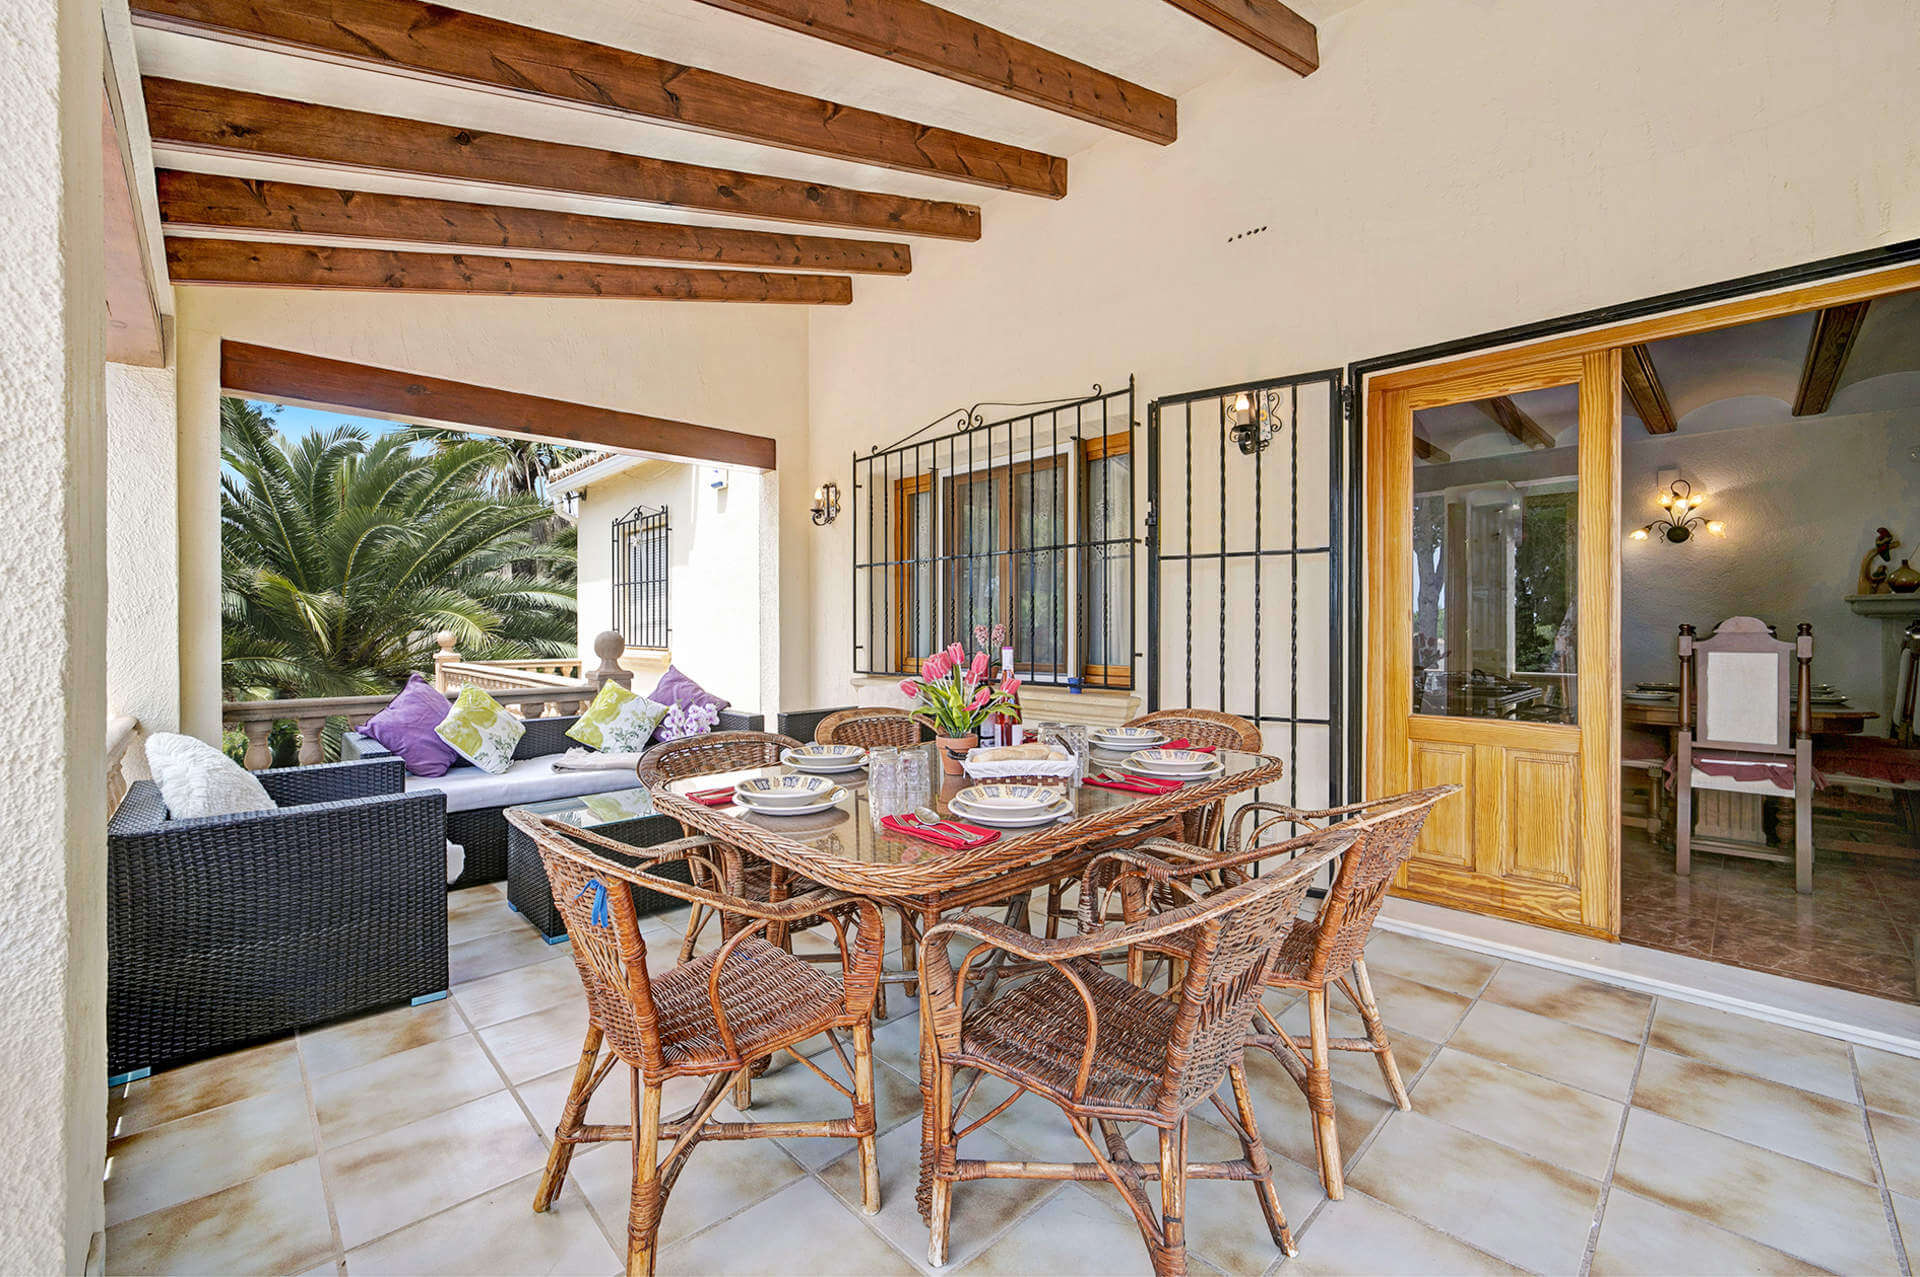 Villa de style méditerranéen à vendre à Pla del Mar Moraira